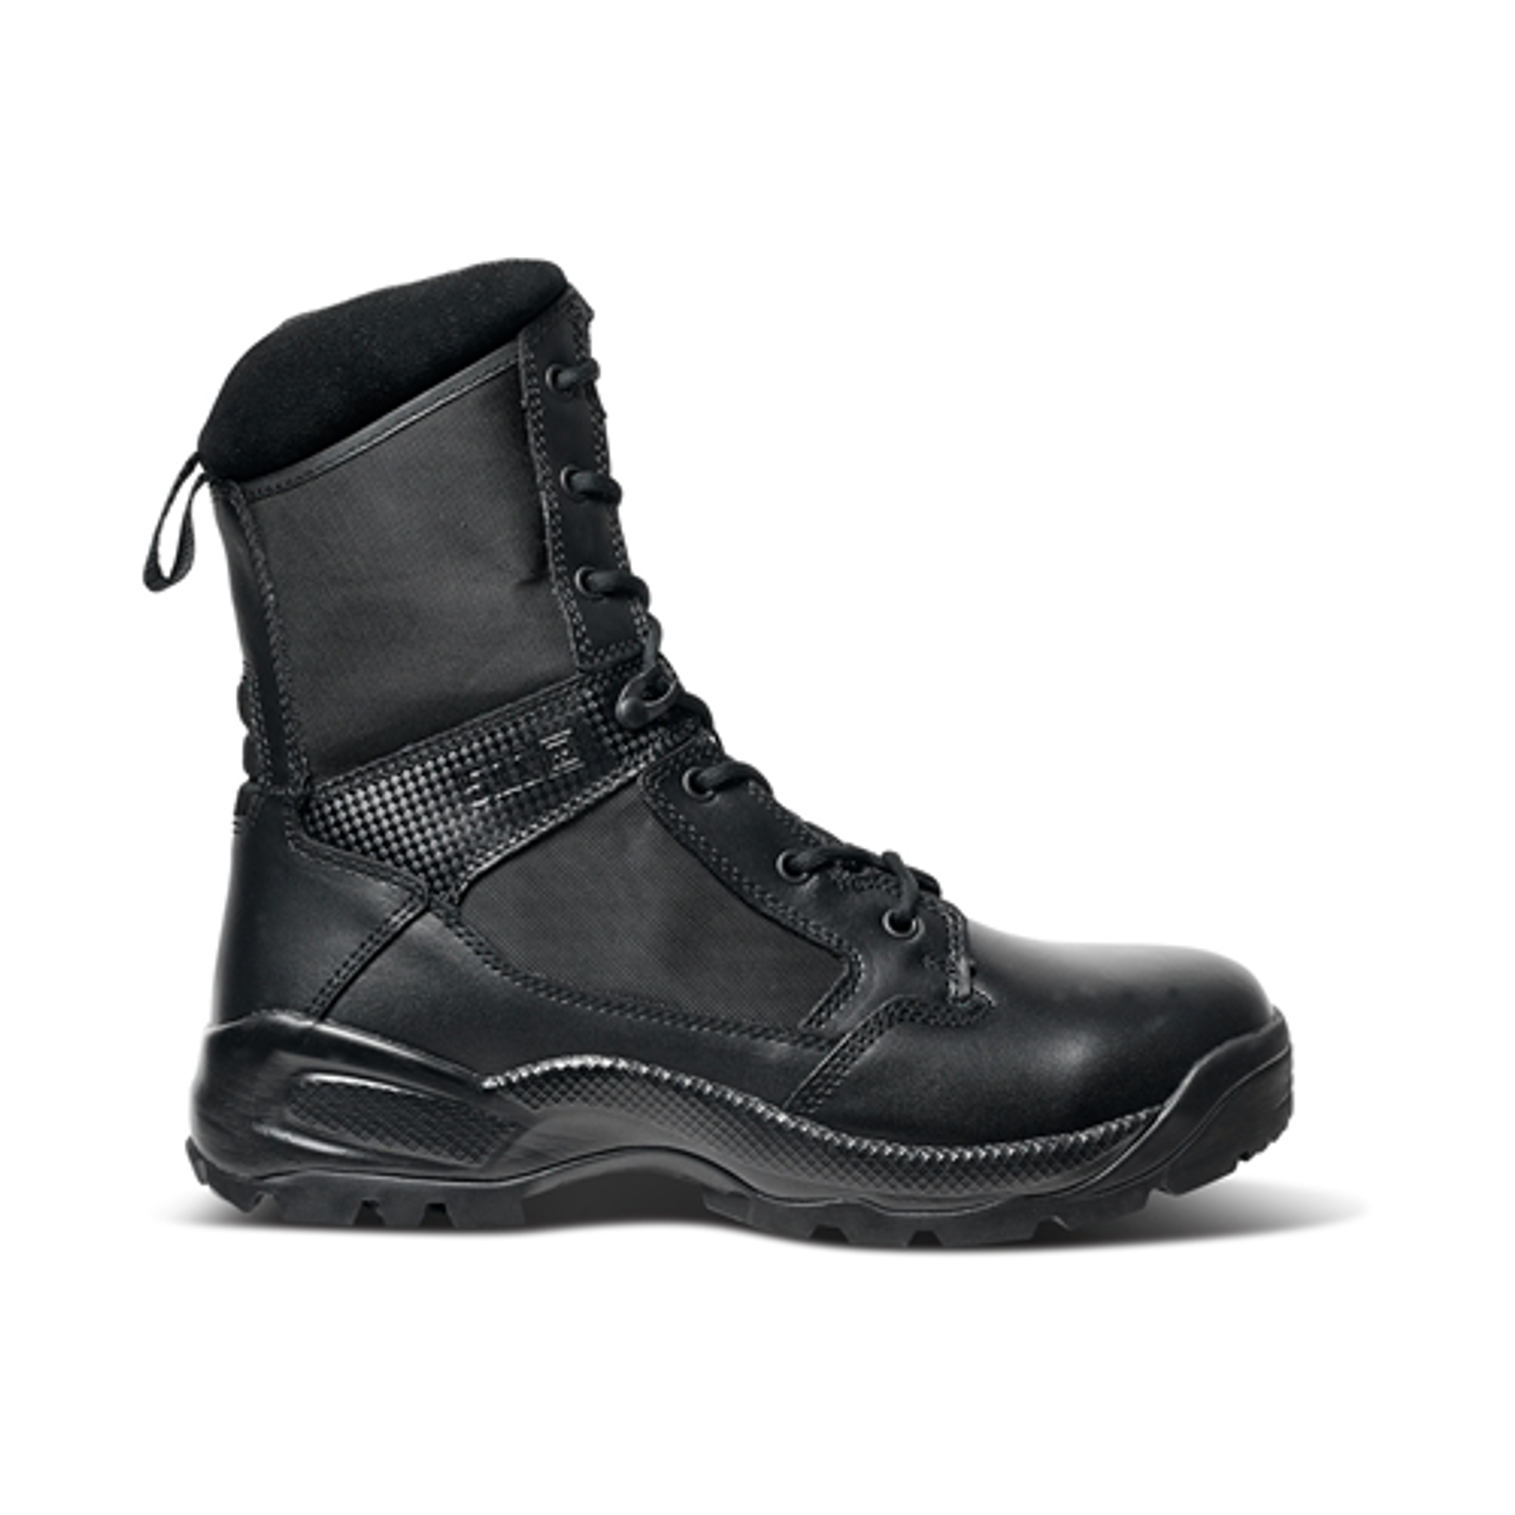 A.t.a.c. 2.0 Size Zip 8 Boots - KR5-123910198.5W